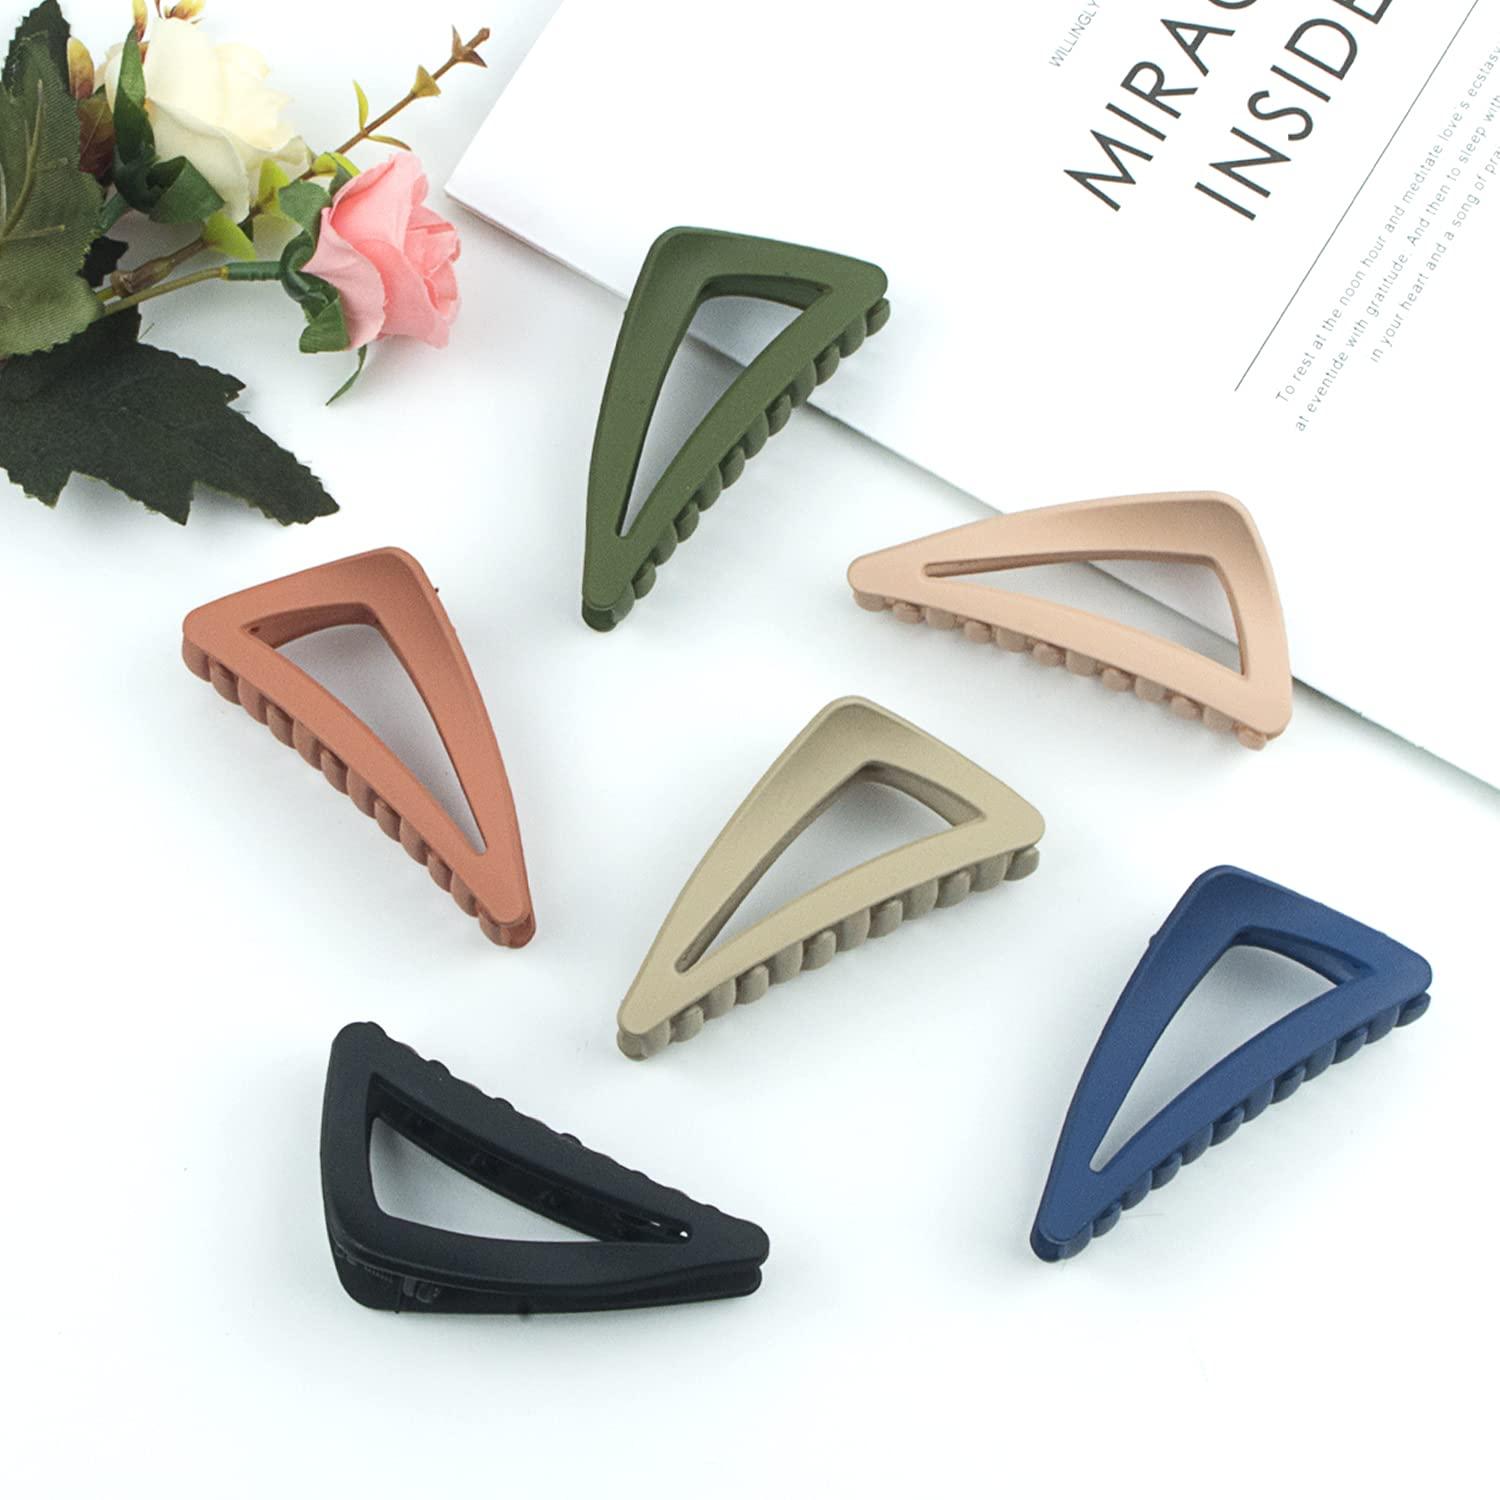 Triangle-logo claw hair clip